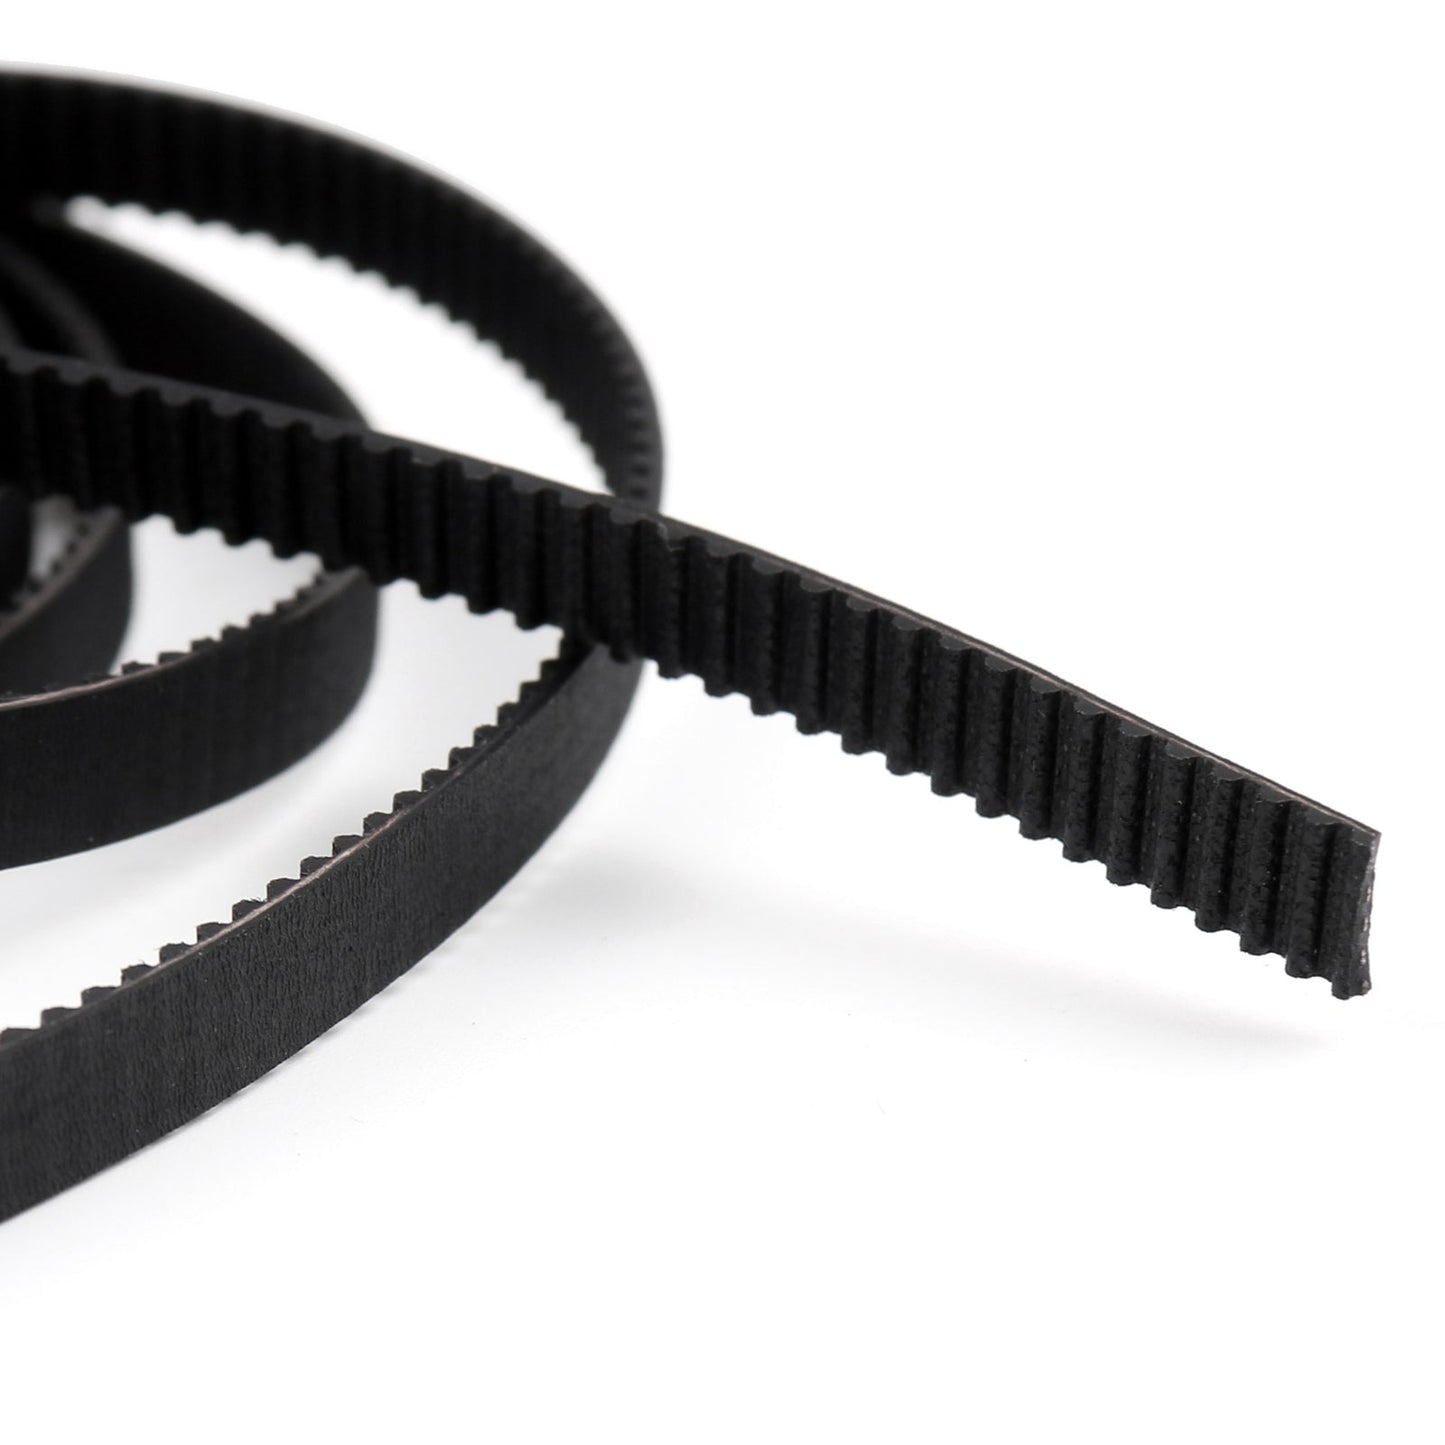 8pcs GT2 Pulley 20Teeth Bore 8mm + 5m GT2 Timing Belt For 3D Printer Part RepRap